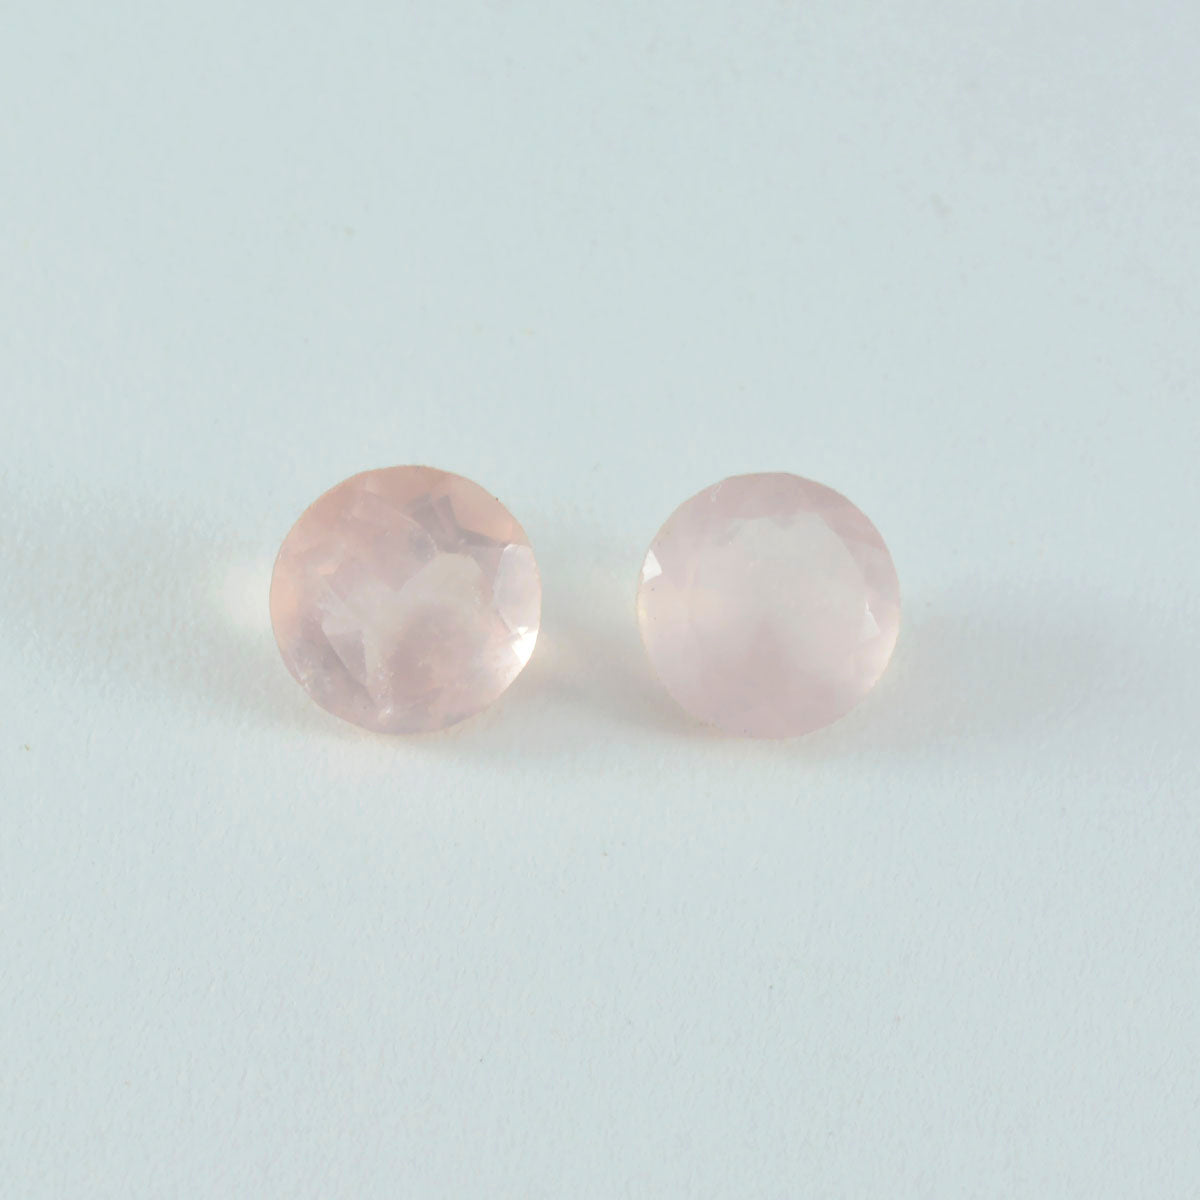 Riyogems 1PC Pink Rose Quartz Faceted 9x9 mm Round Shape beautiful Quality Loose Gemstone